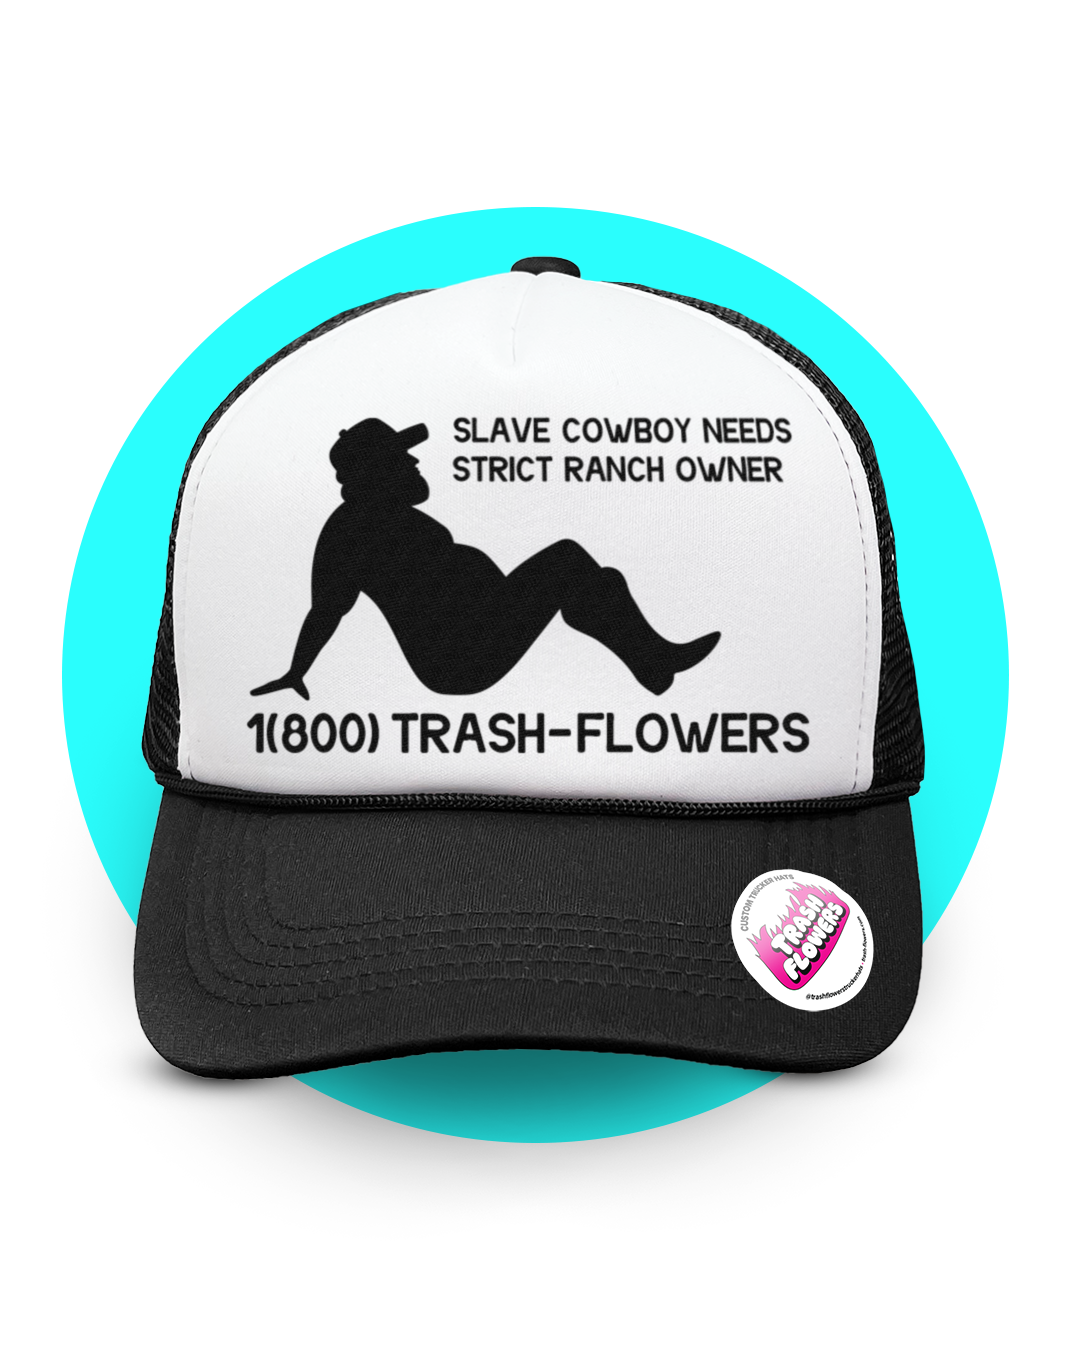 Trash-Flowers Mud Flap Trucker Hat